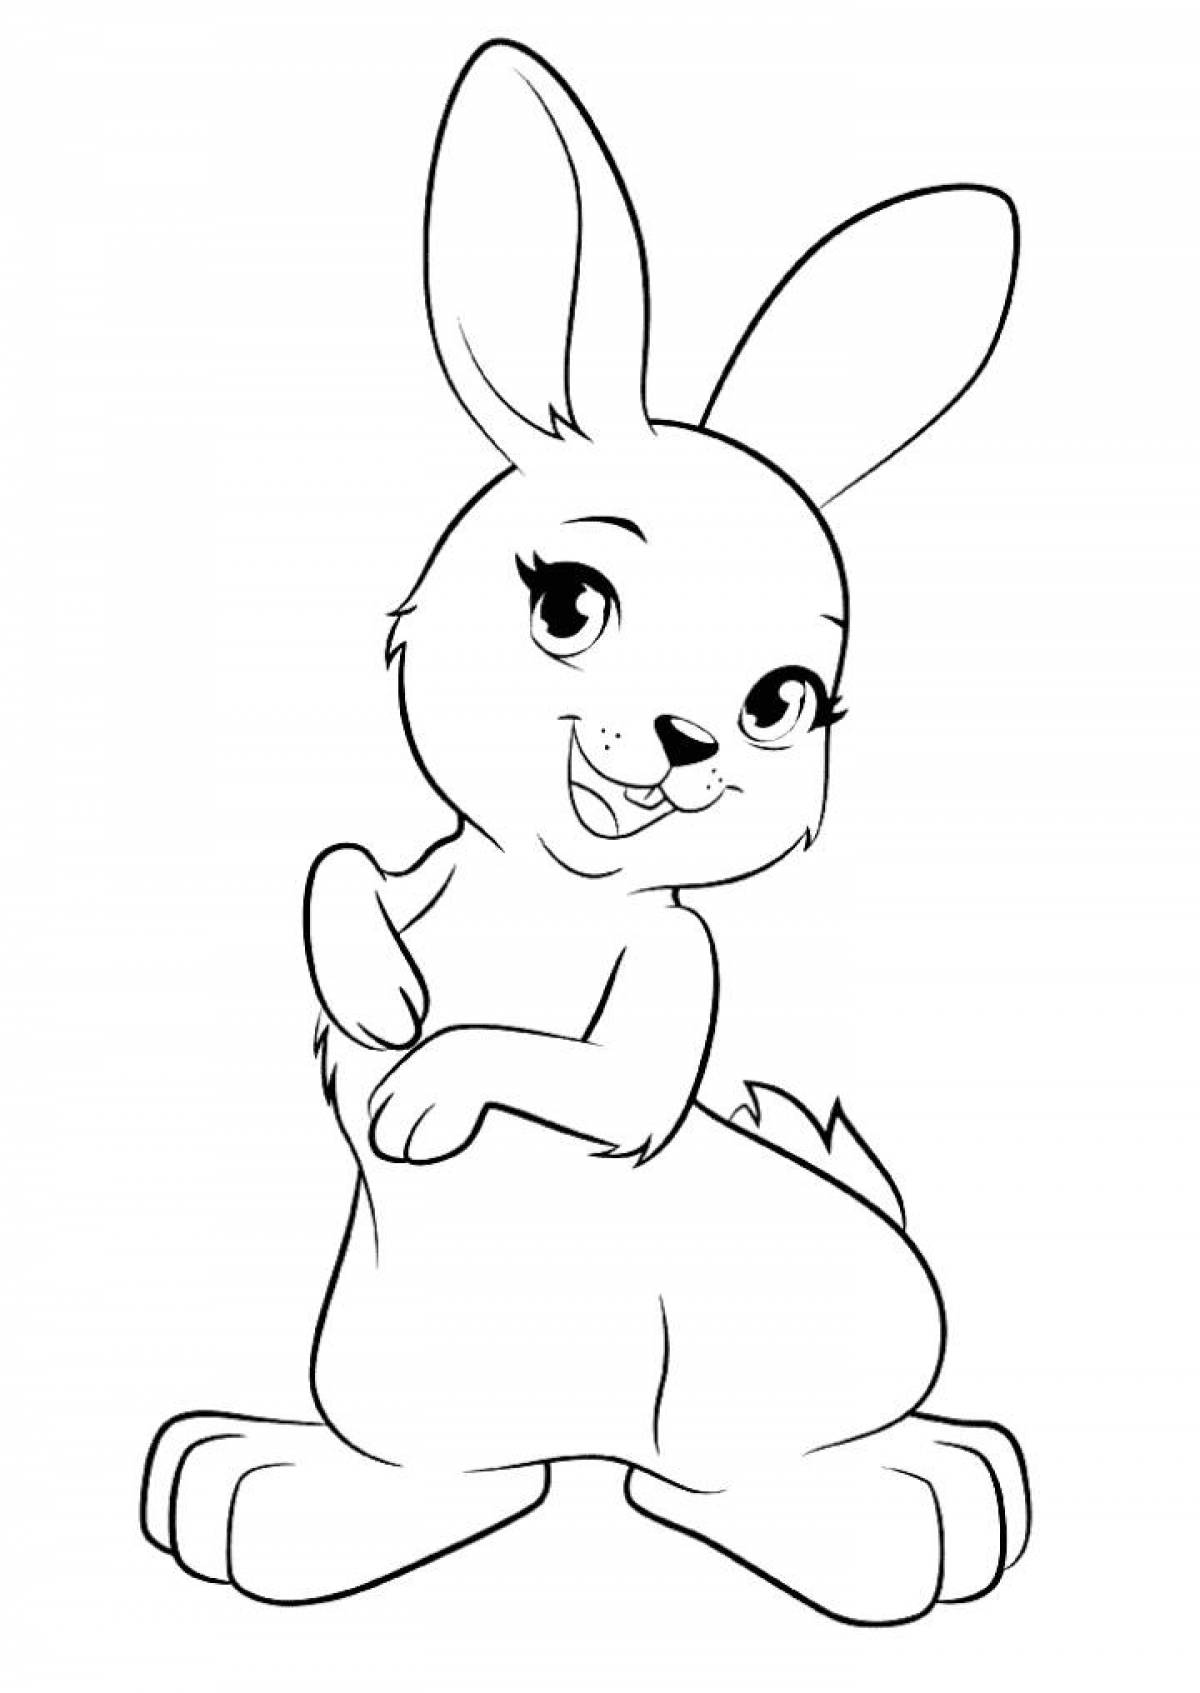 Рисунок заяц